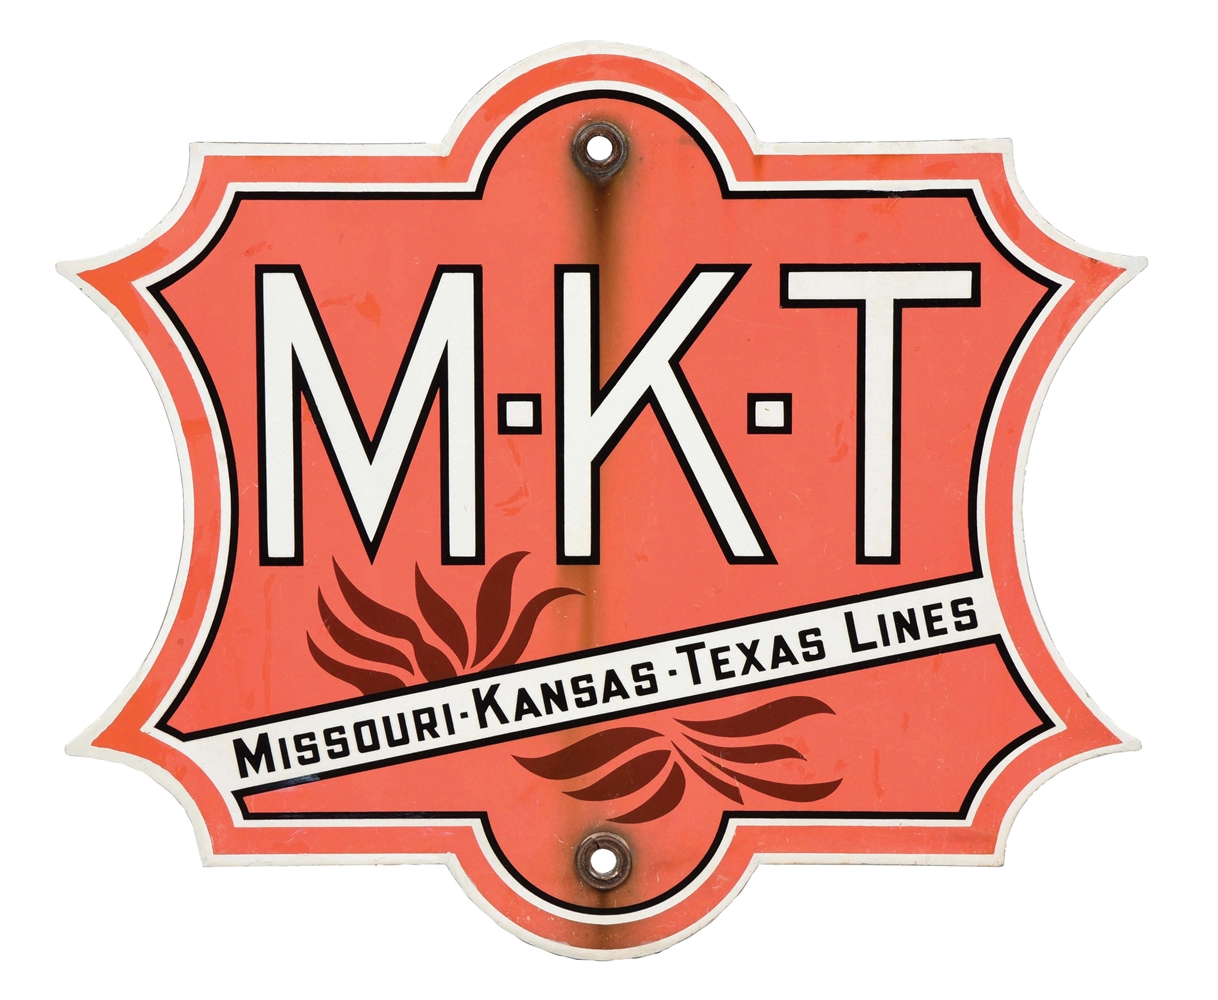 RARE M-K-T MISSOURI KANSAS TEXAS LINES PORCELAIN RAILROAD SIGN.